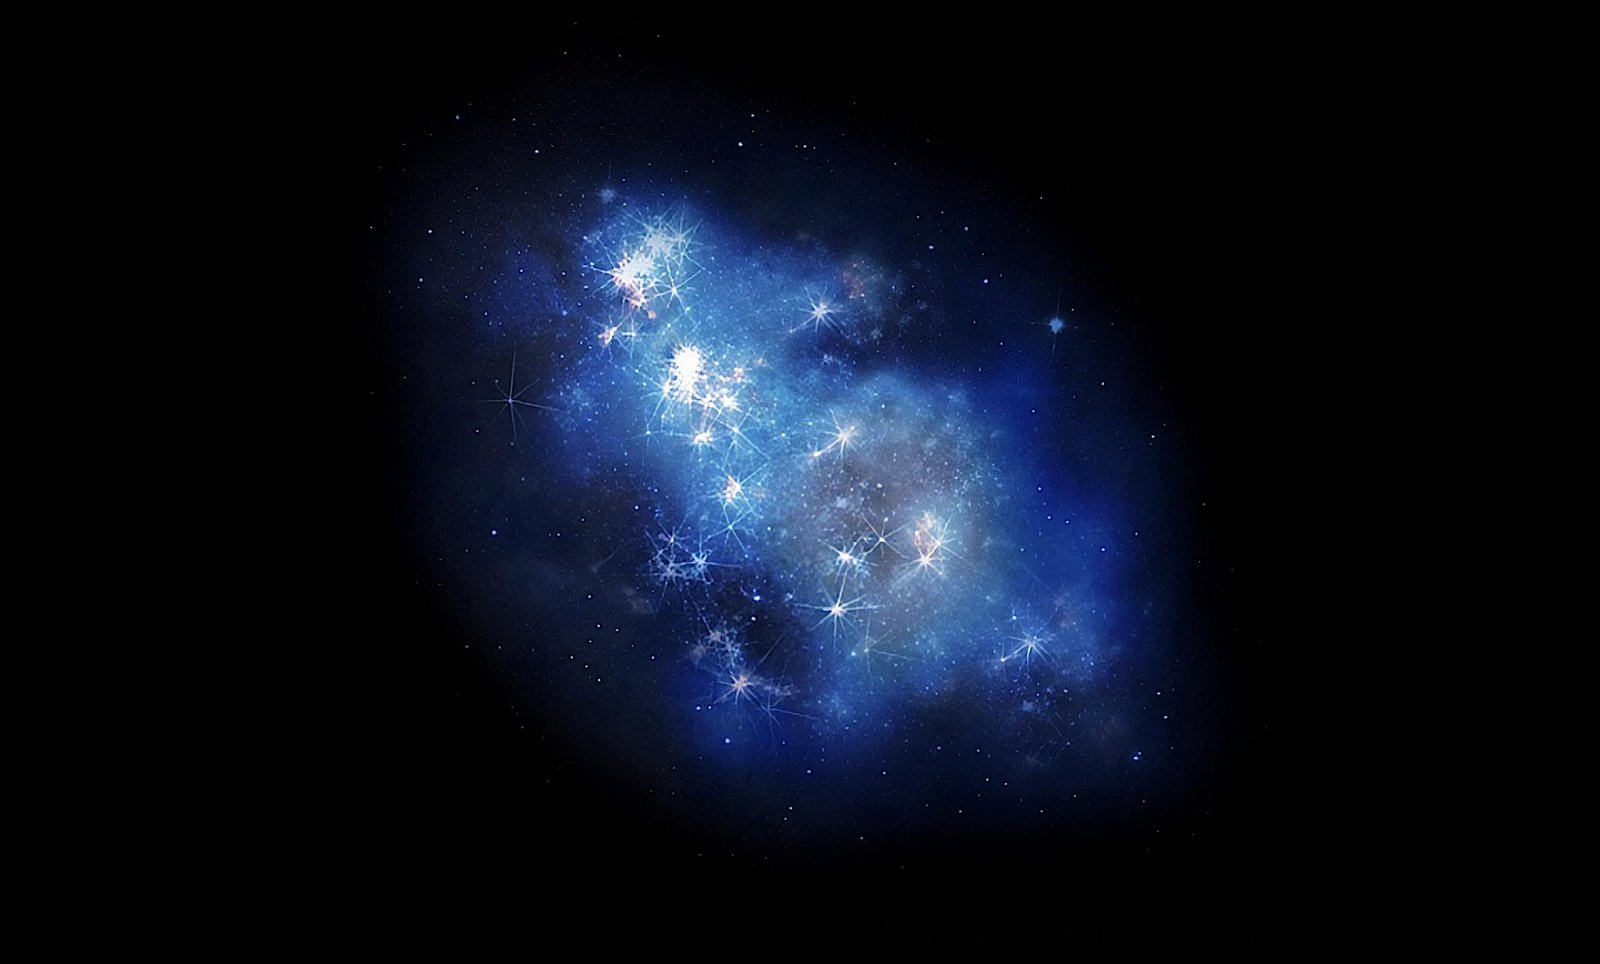 James Webb Space Telescope GN-z11